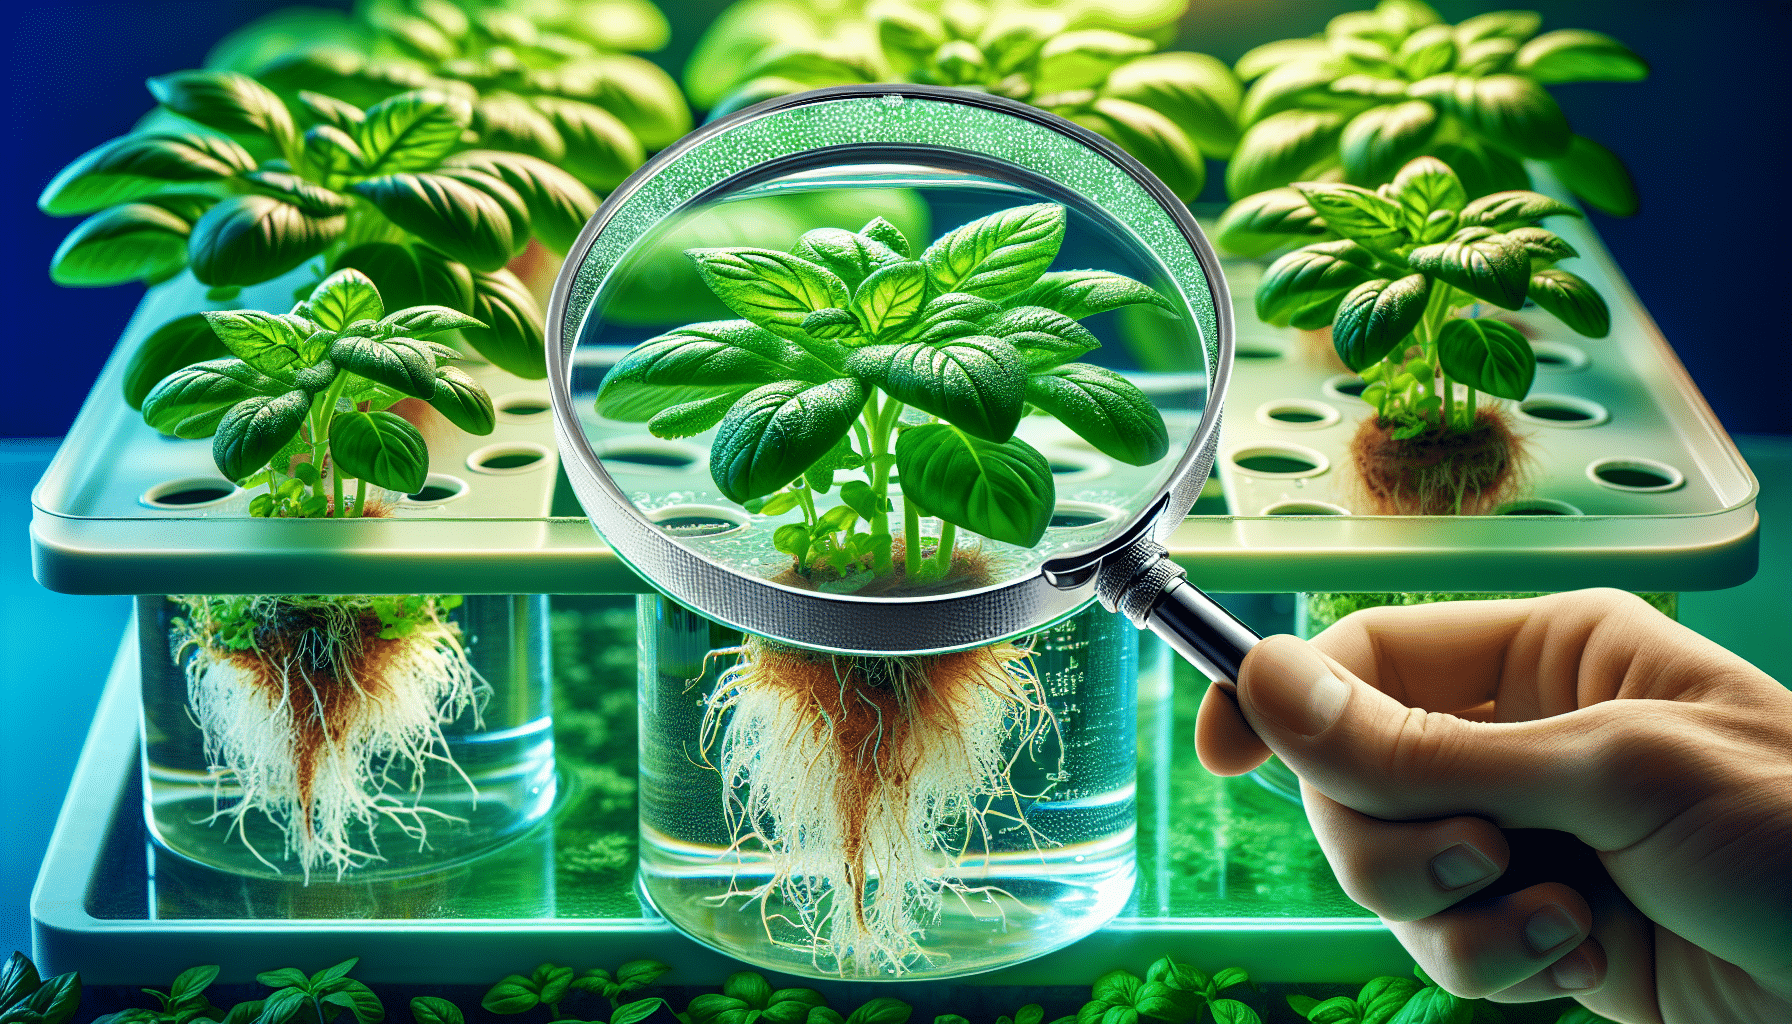 Advantages of hydroponic farming